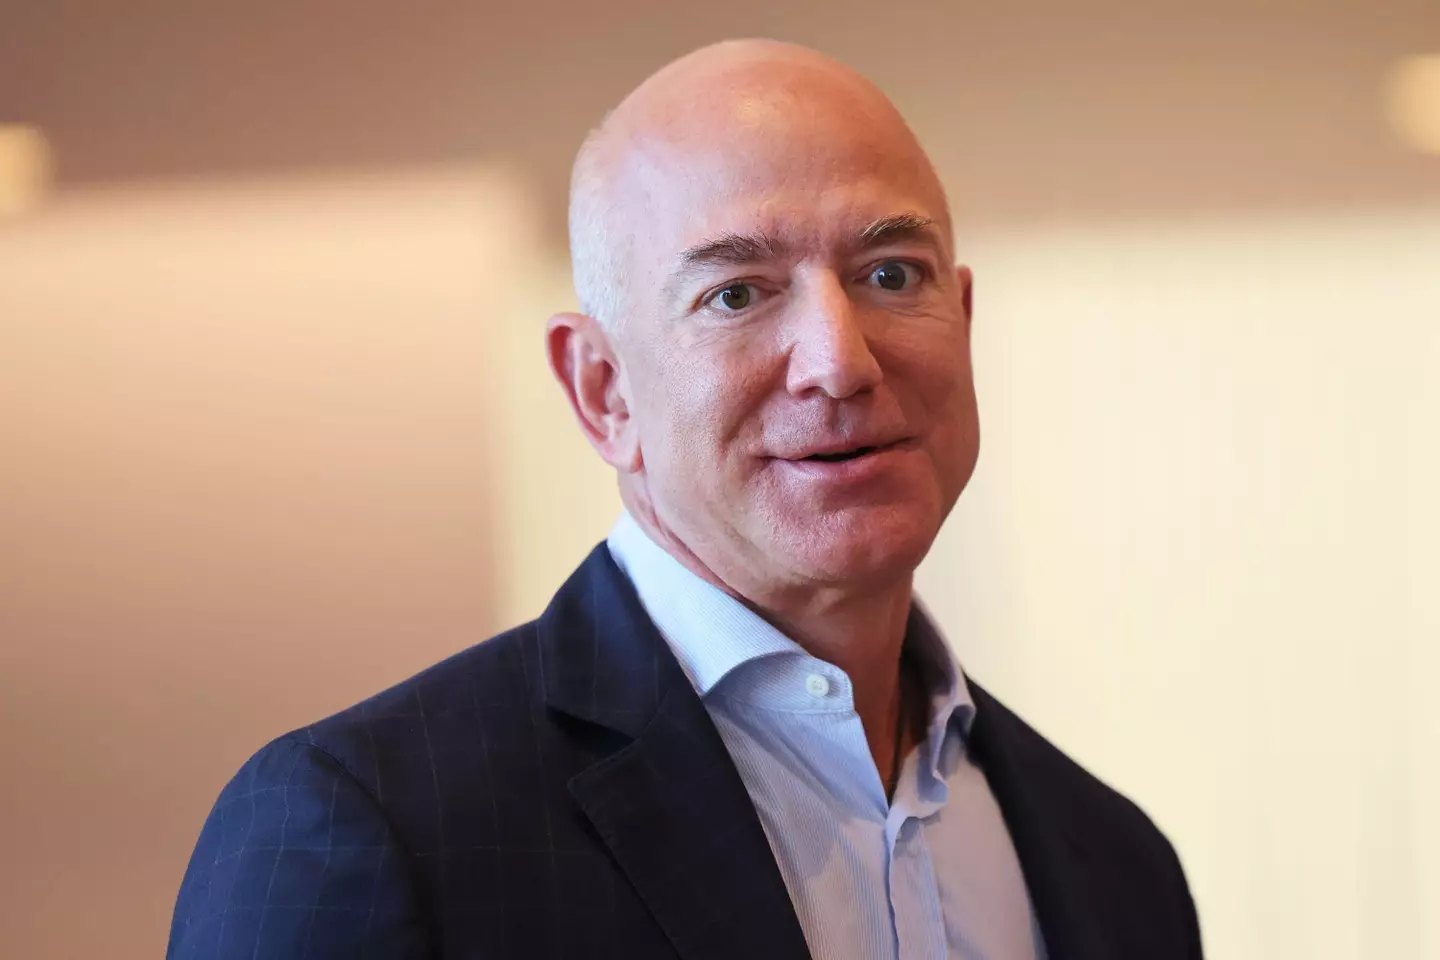 Bezos' lawyer said the allegations 'lack merit'.